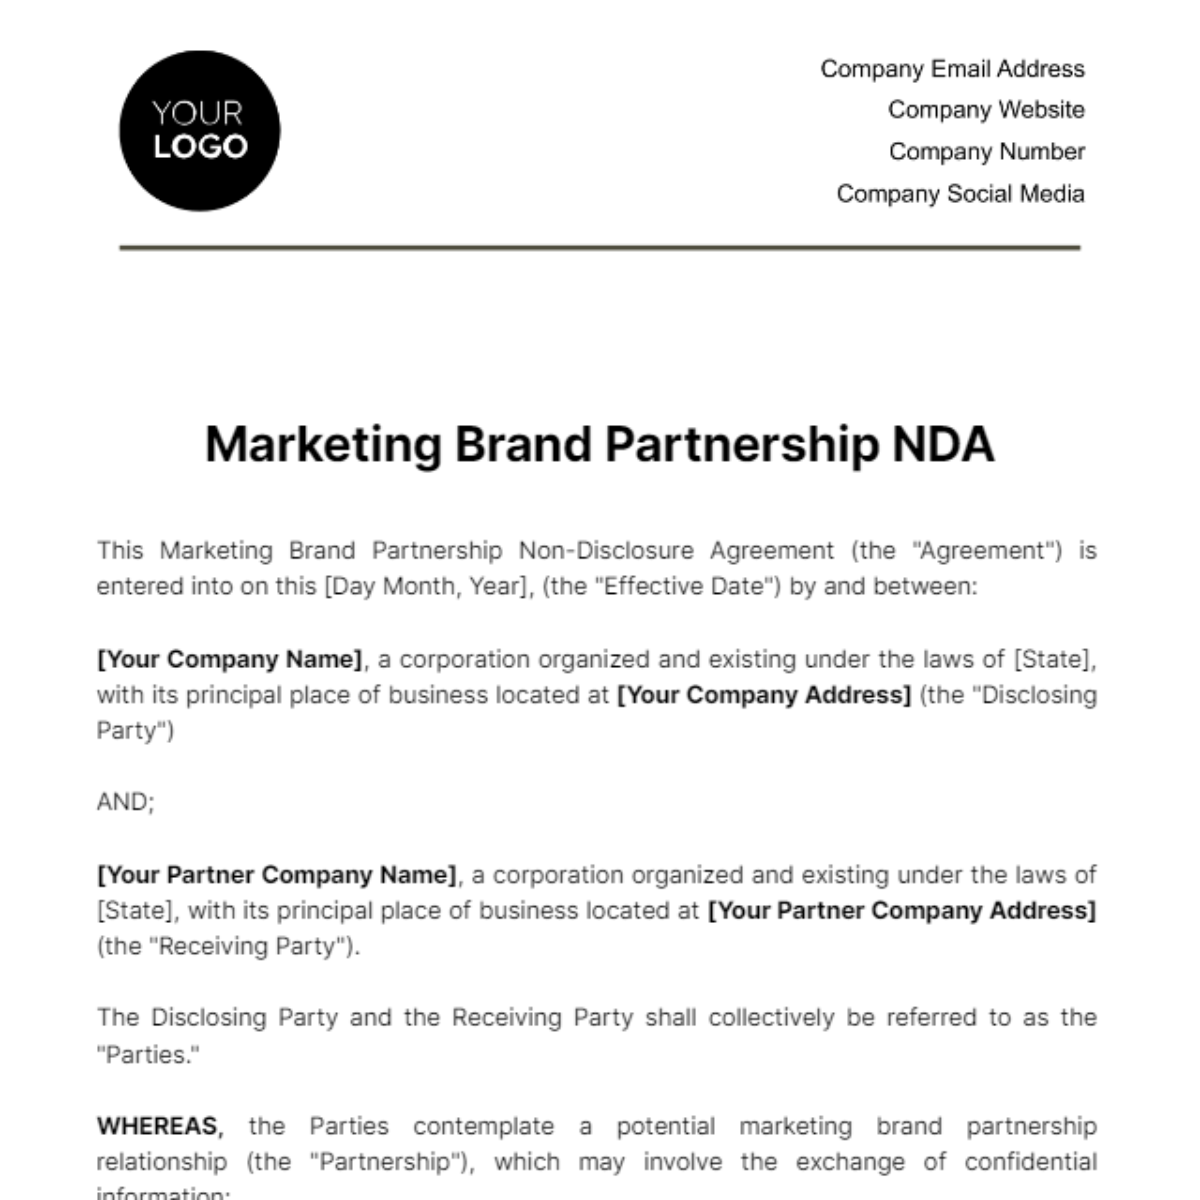 Marketing Brand Partnership NDA Template